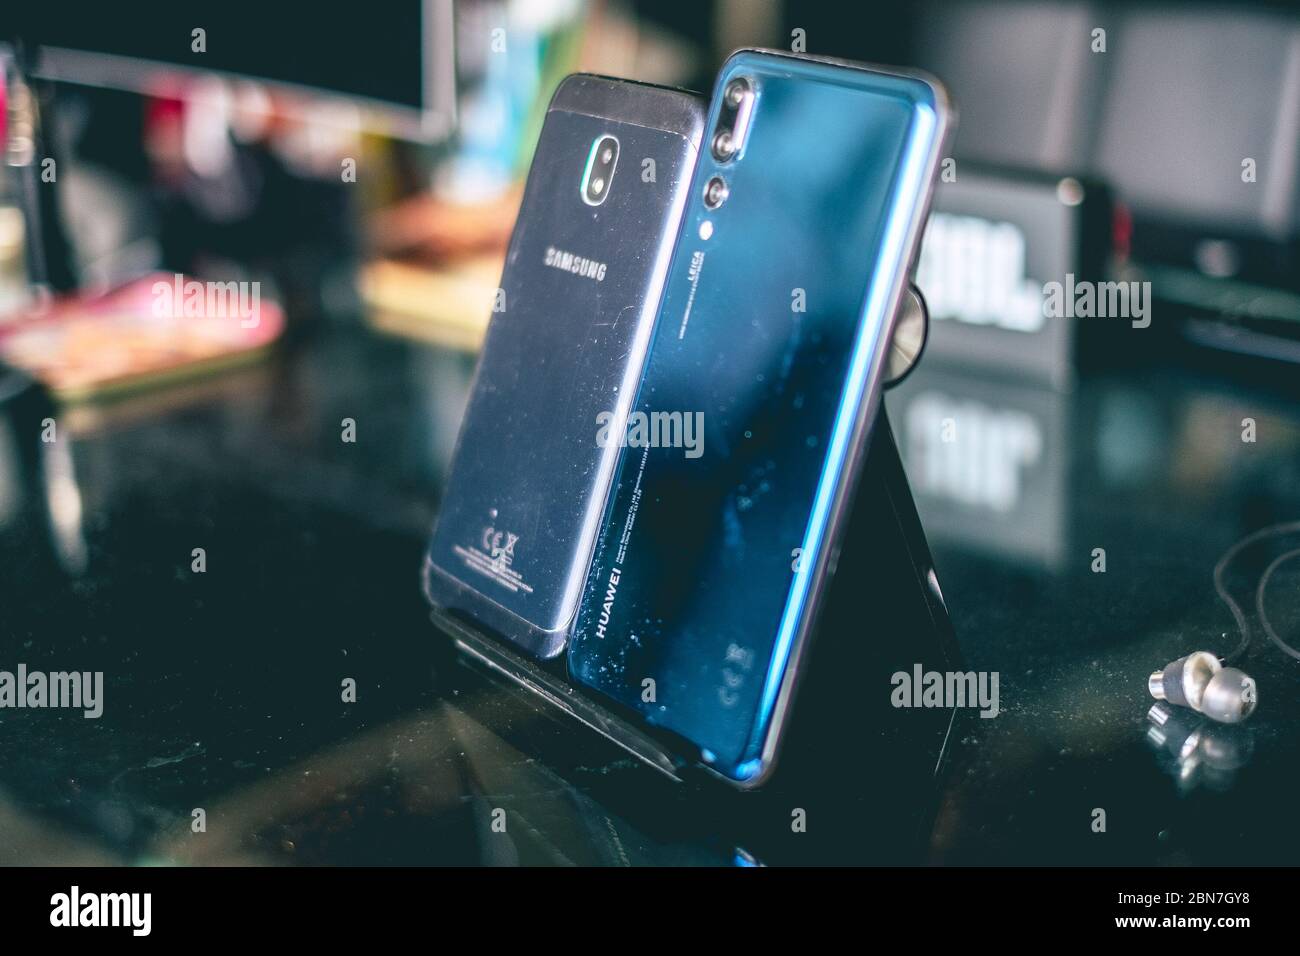 Comparación de cámaras de teléfono entre teléfonos Samsung y Huawei Foto de stock